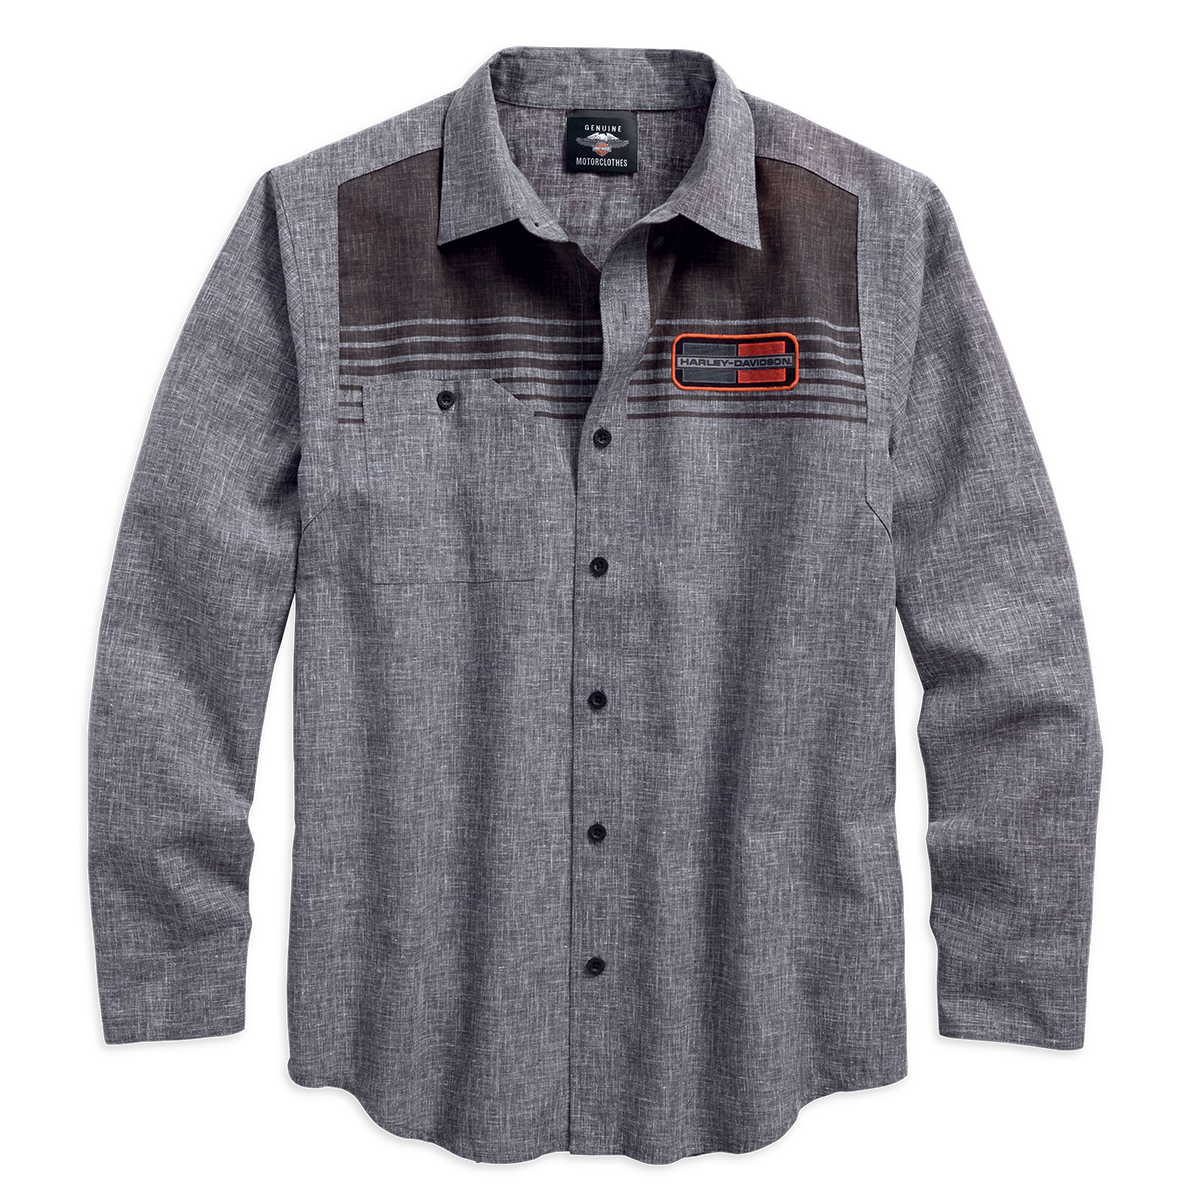 Harley-Davidson Textured Slub Men's Shirt